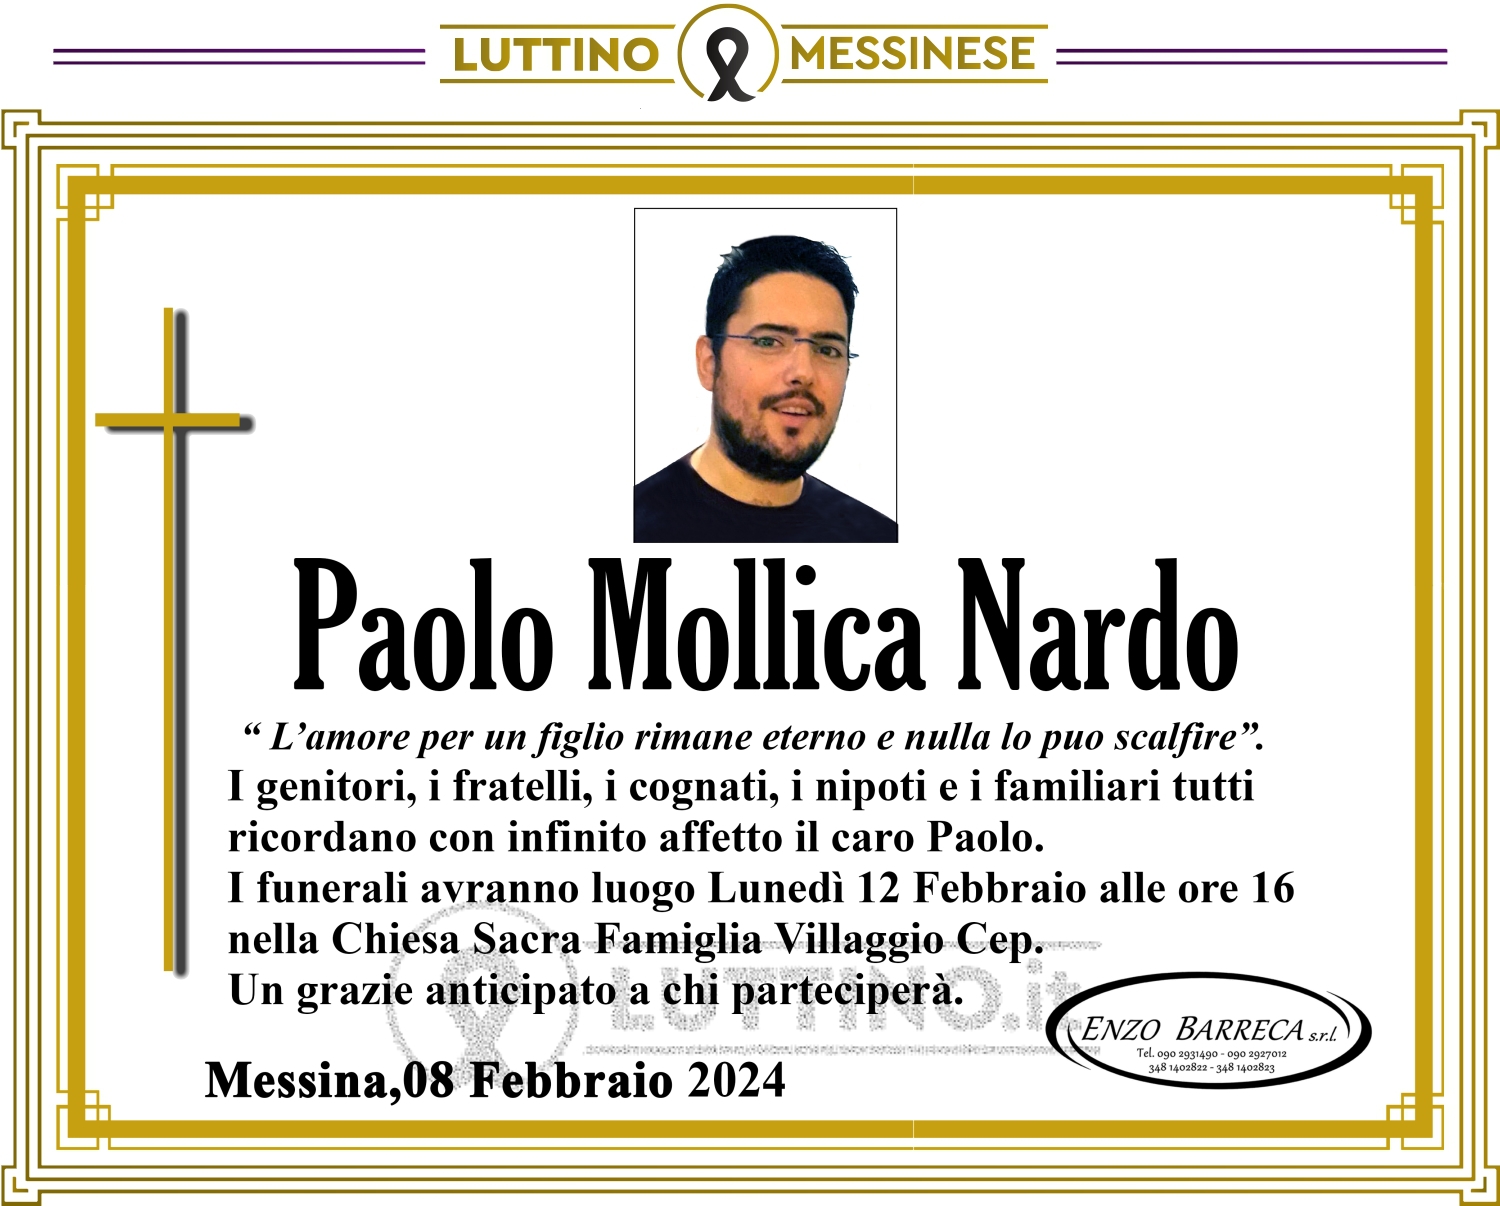 Paolo Mollica